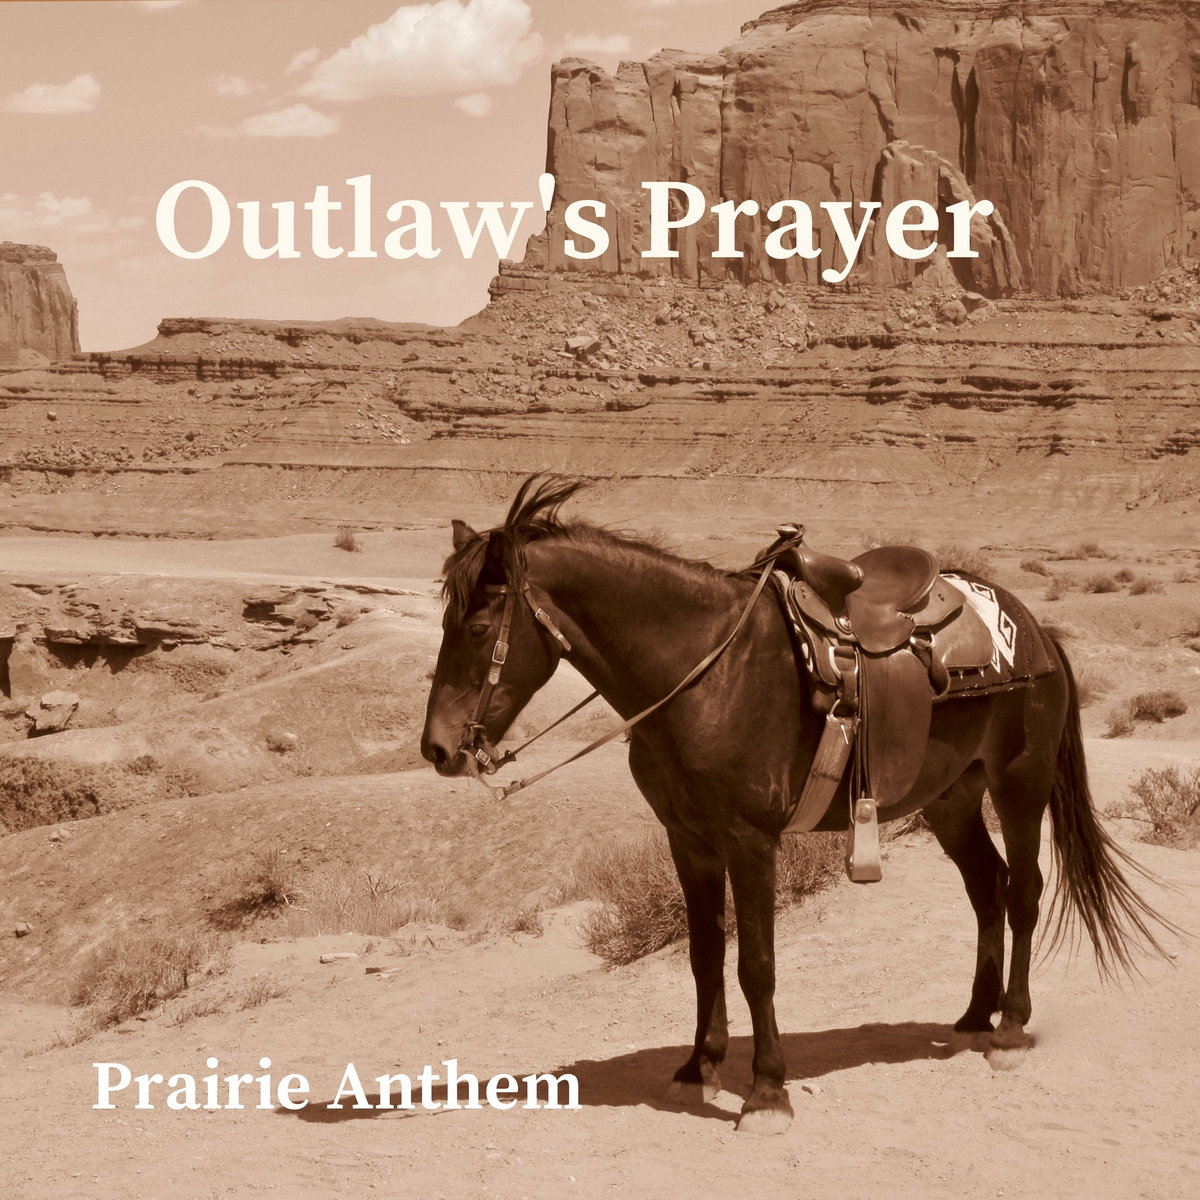 Outlaw's Prayer